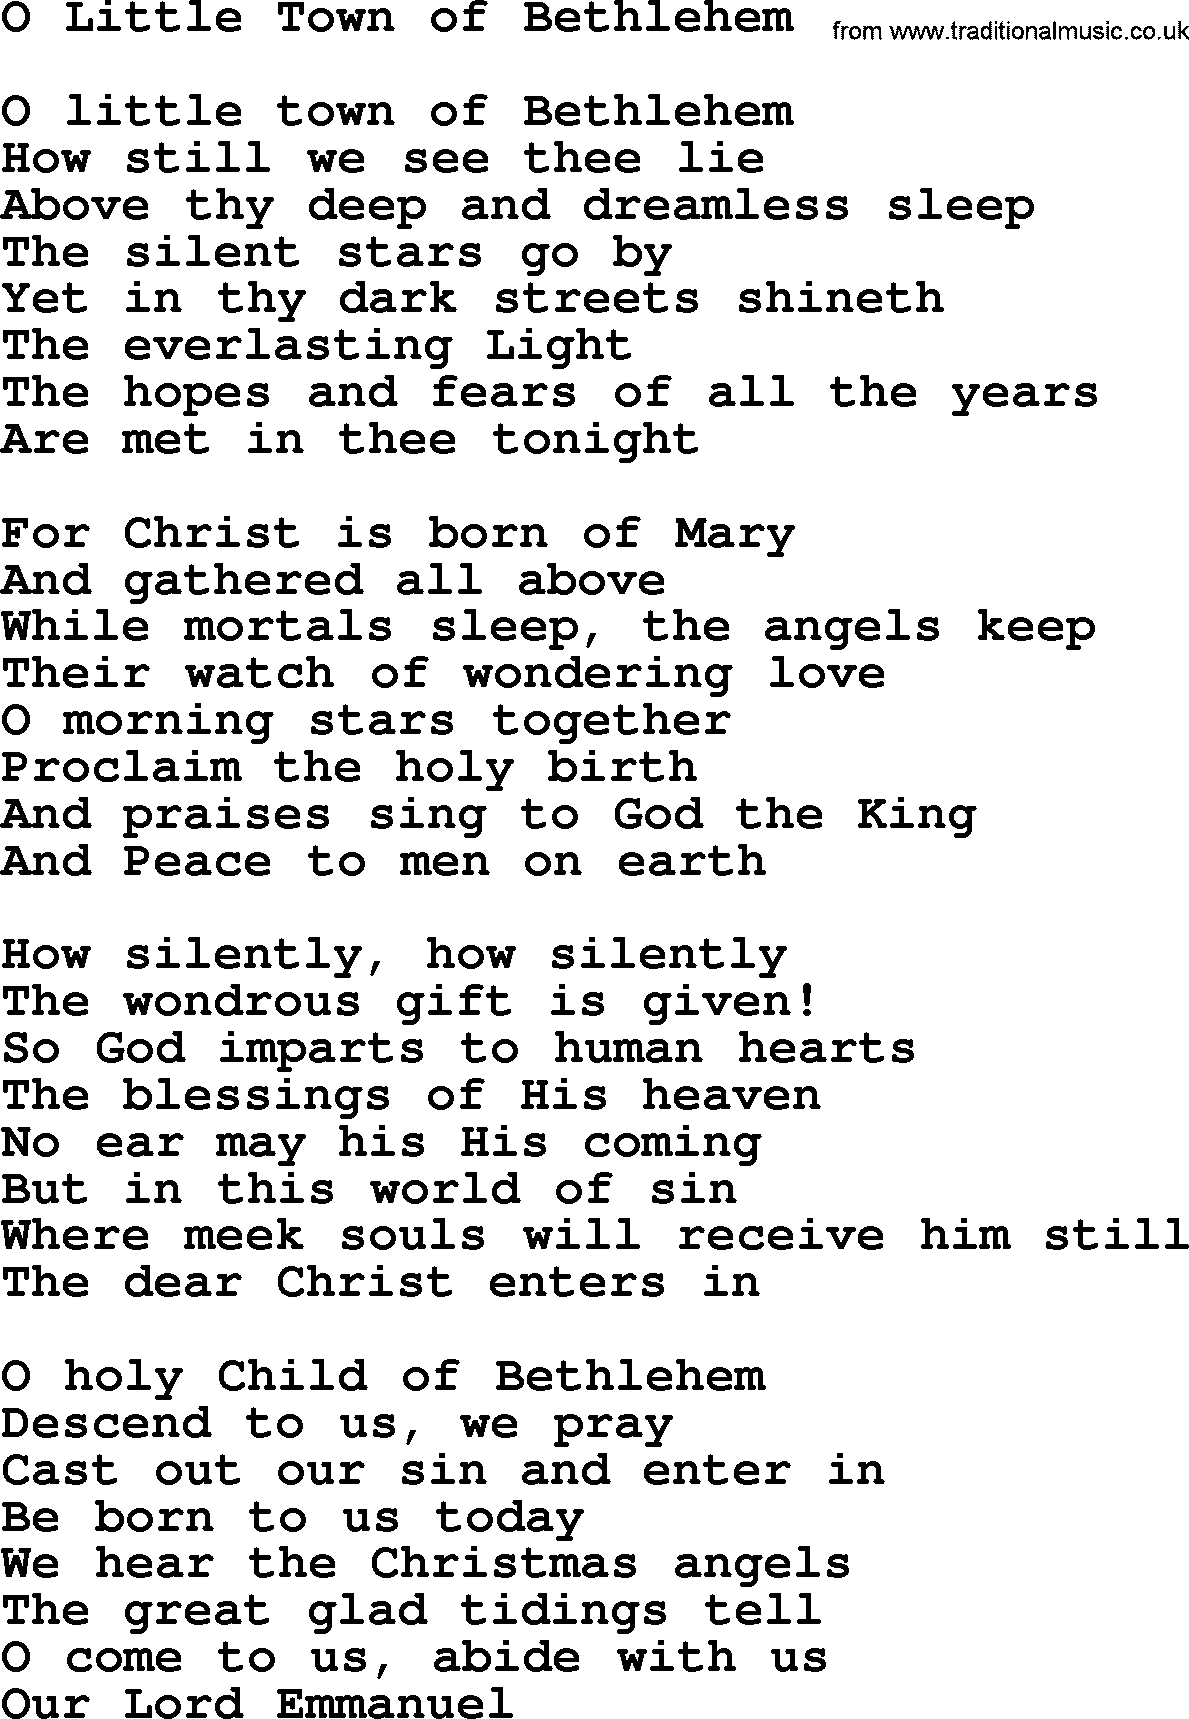 O Little Town Of Bethlehem, by The Byrds lyrics with pdf